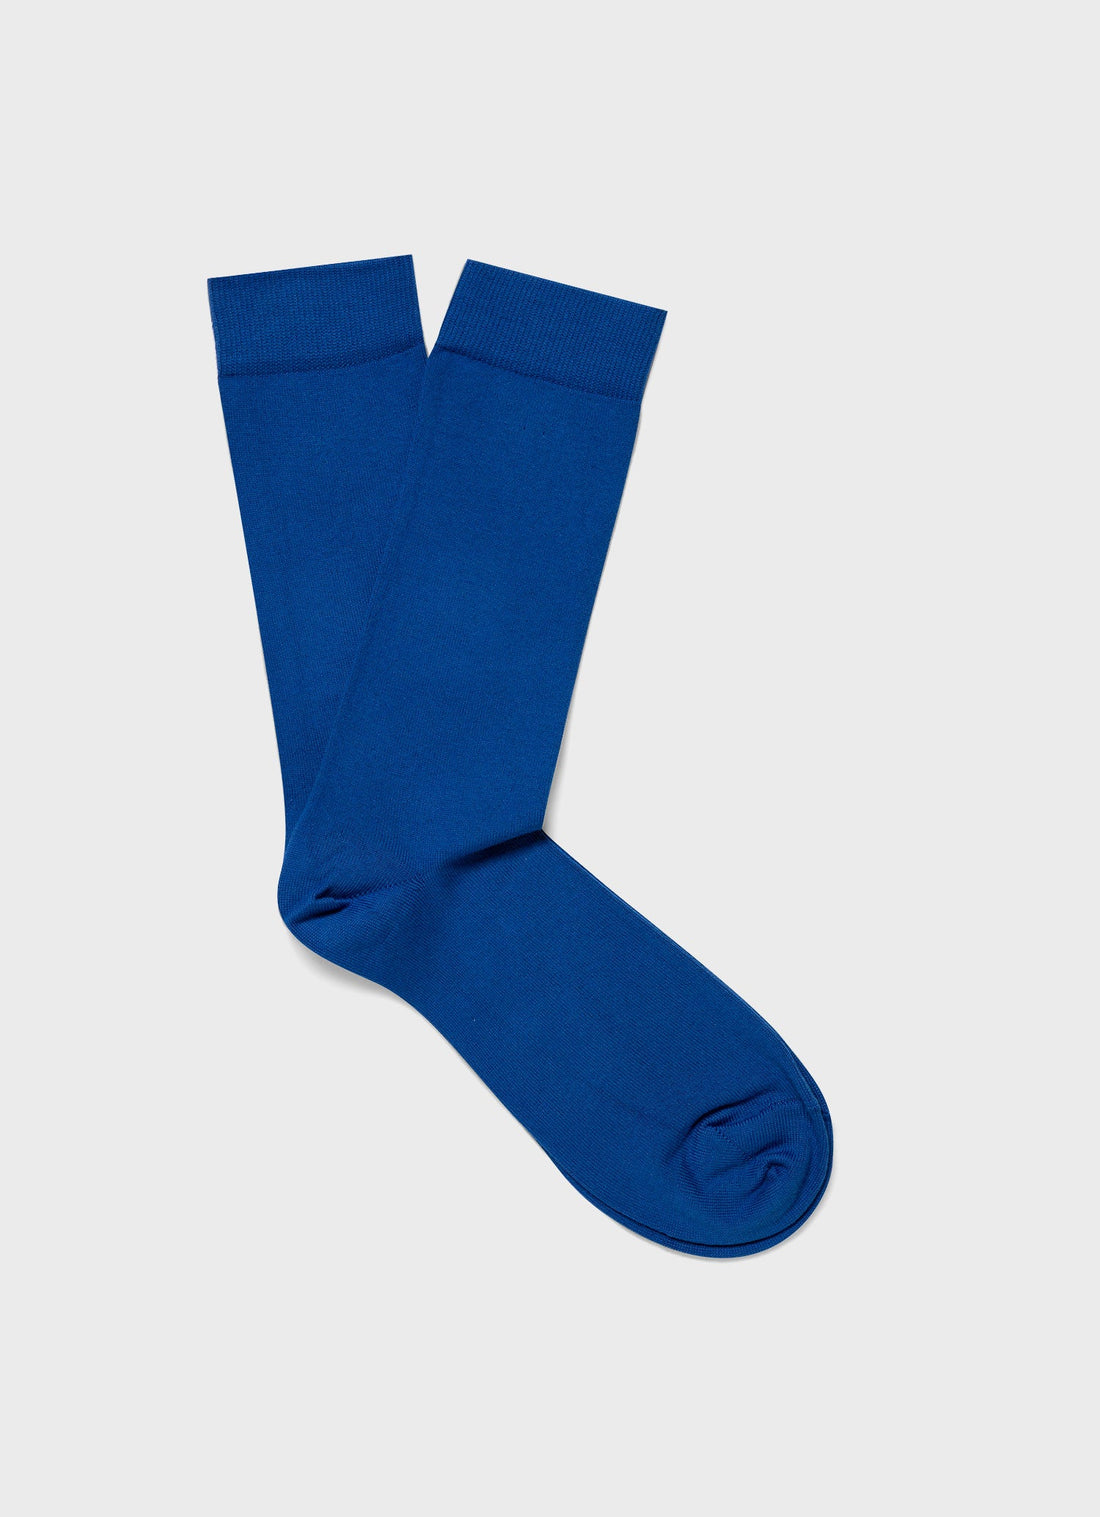 Men's Cotton Socks in French Blue